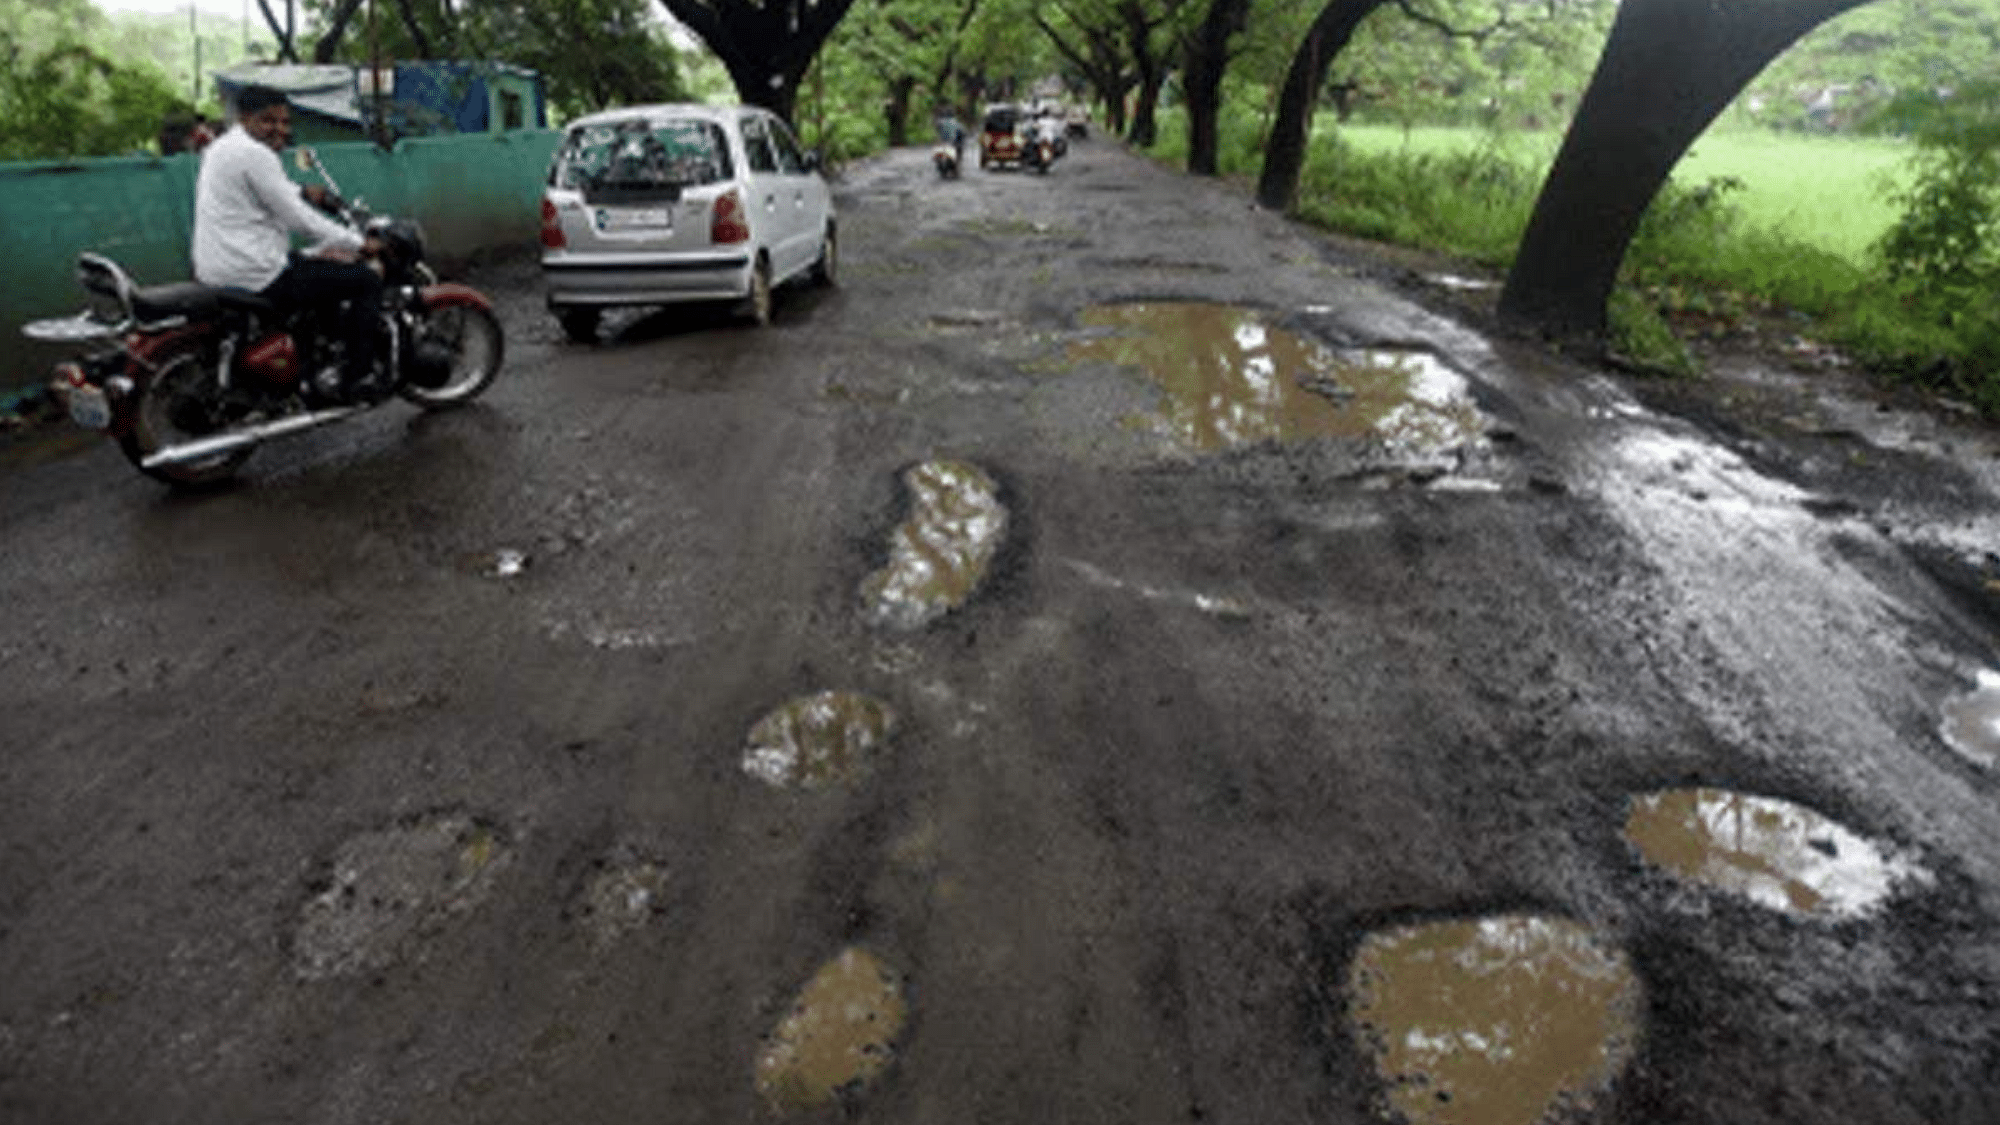 <div class="paragraphs"><p>Representational Image. Mysuru cop spends Rs 3 lakh to fix pothole in area.</p></div>